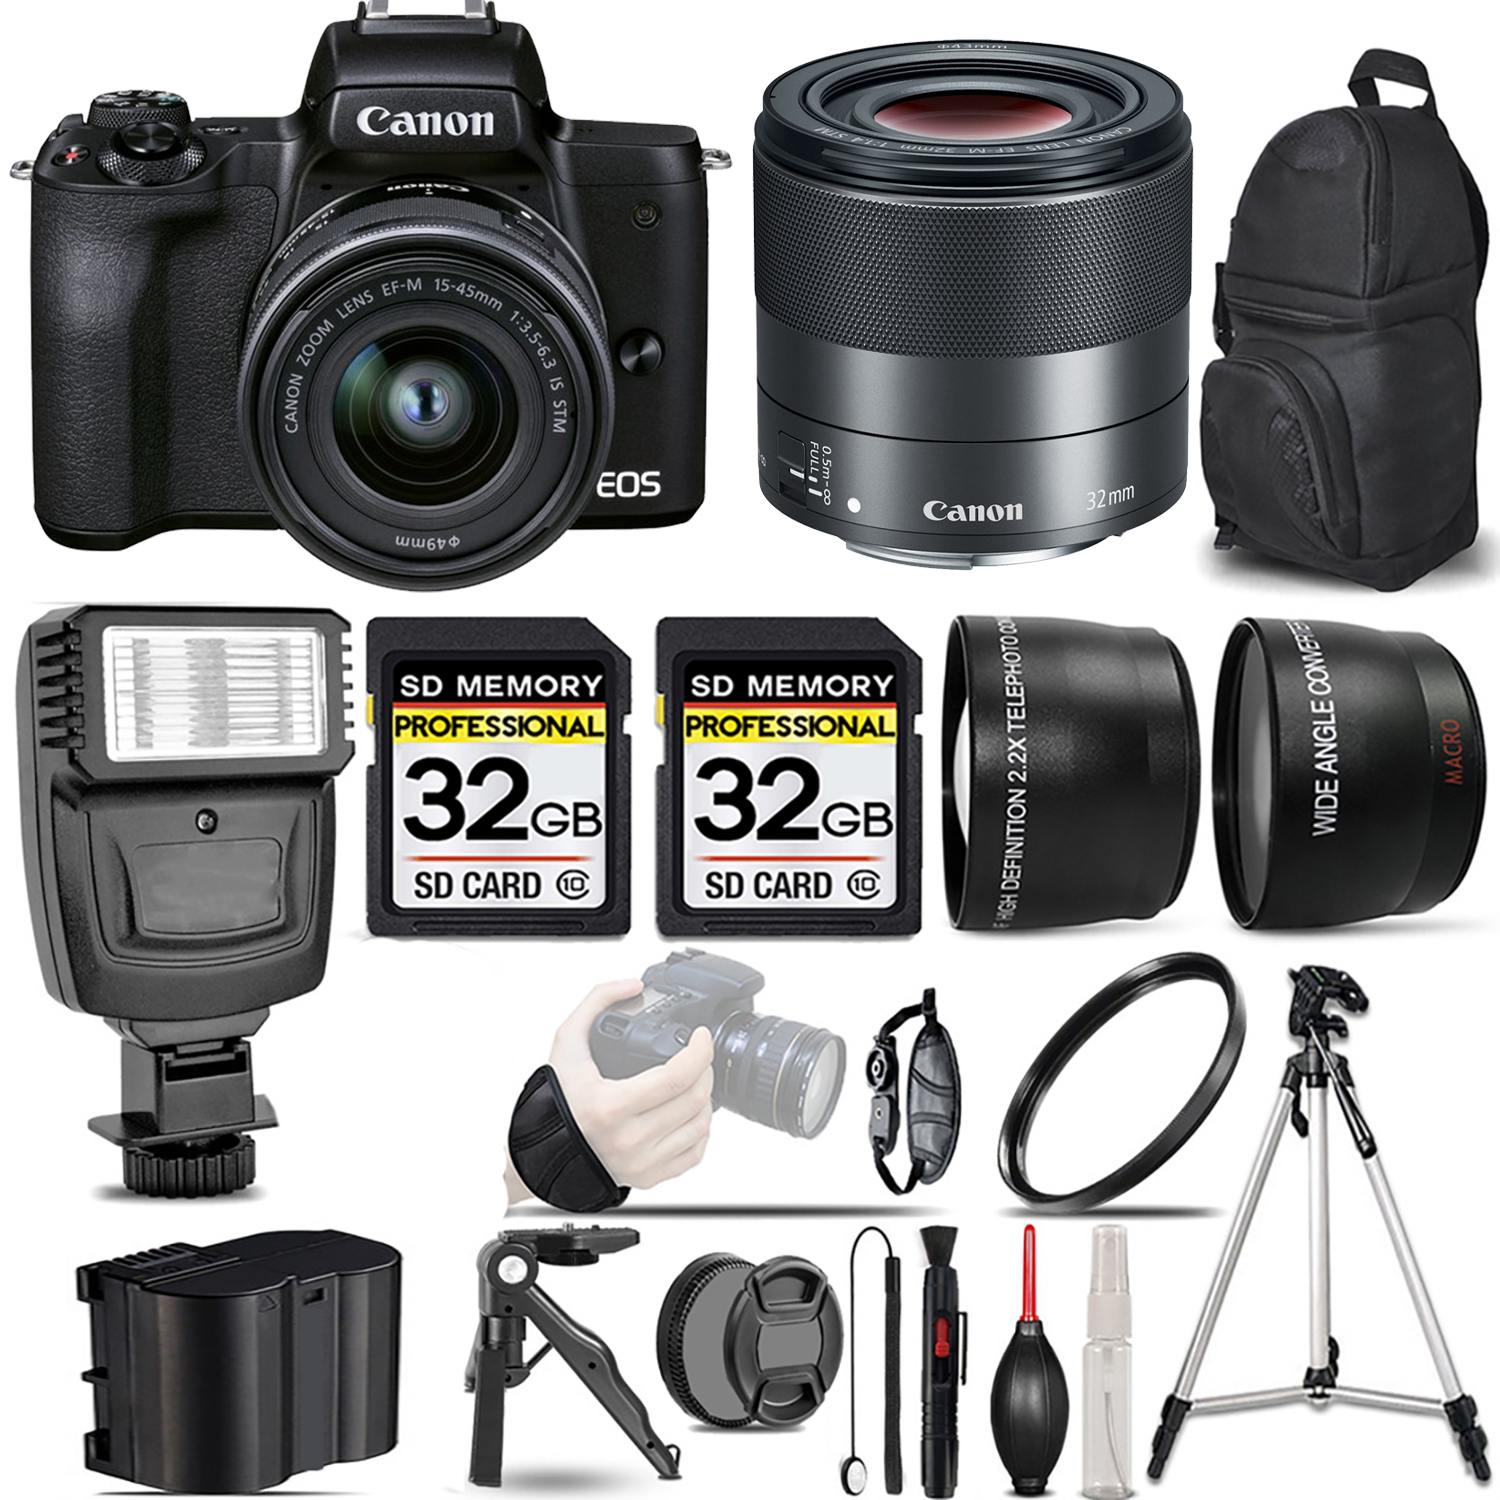 M50 Mark II + 15-45mm Lens (Black) + 32mm f/1.4 STM Lens + Flash + 64GB - Kit *FREE SHIPPING*